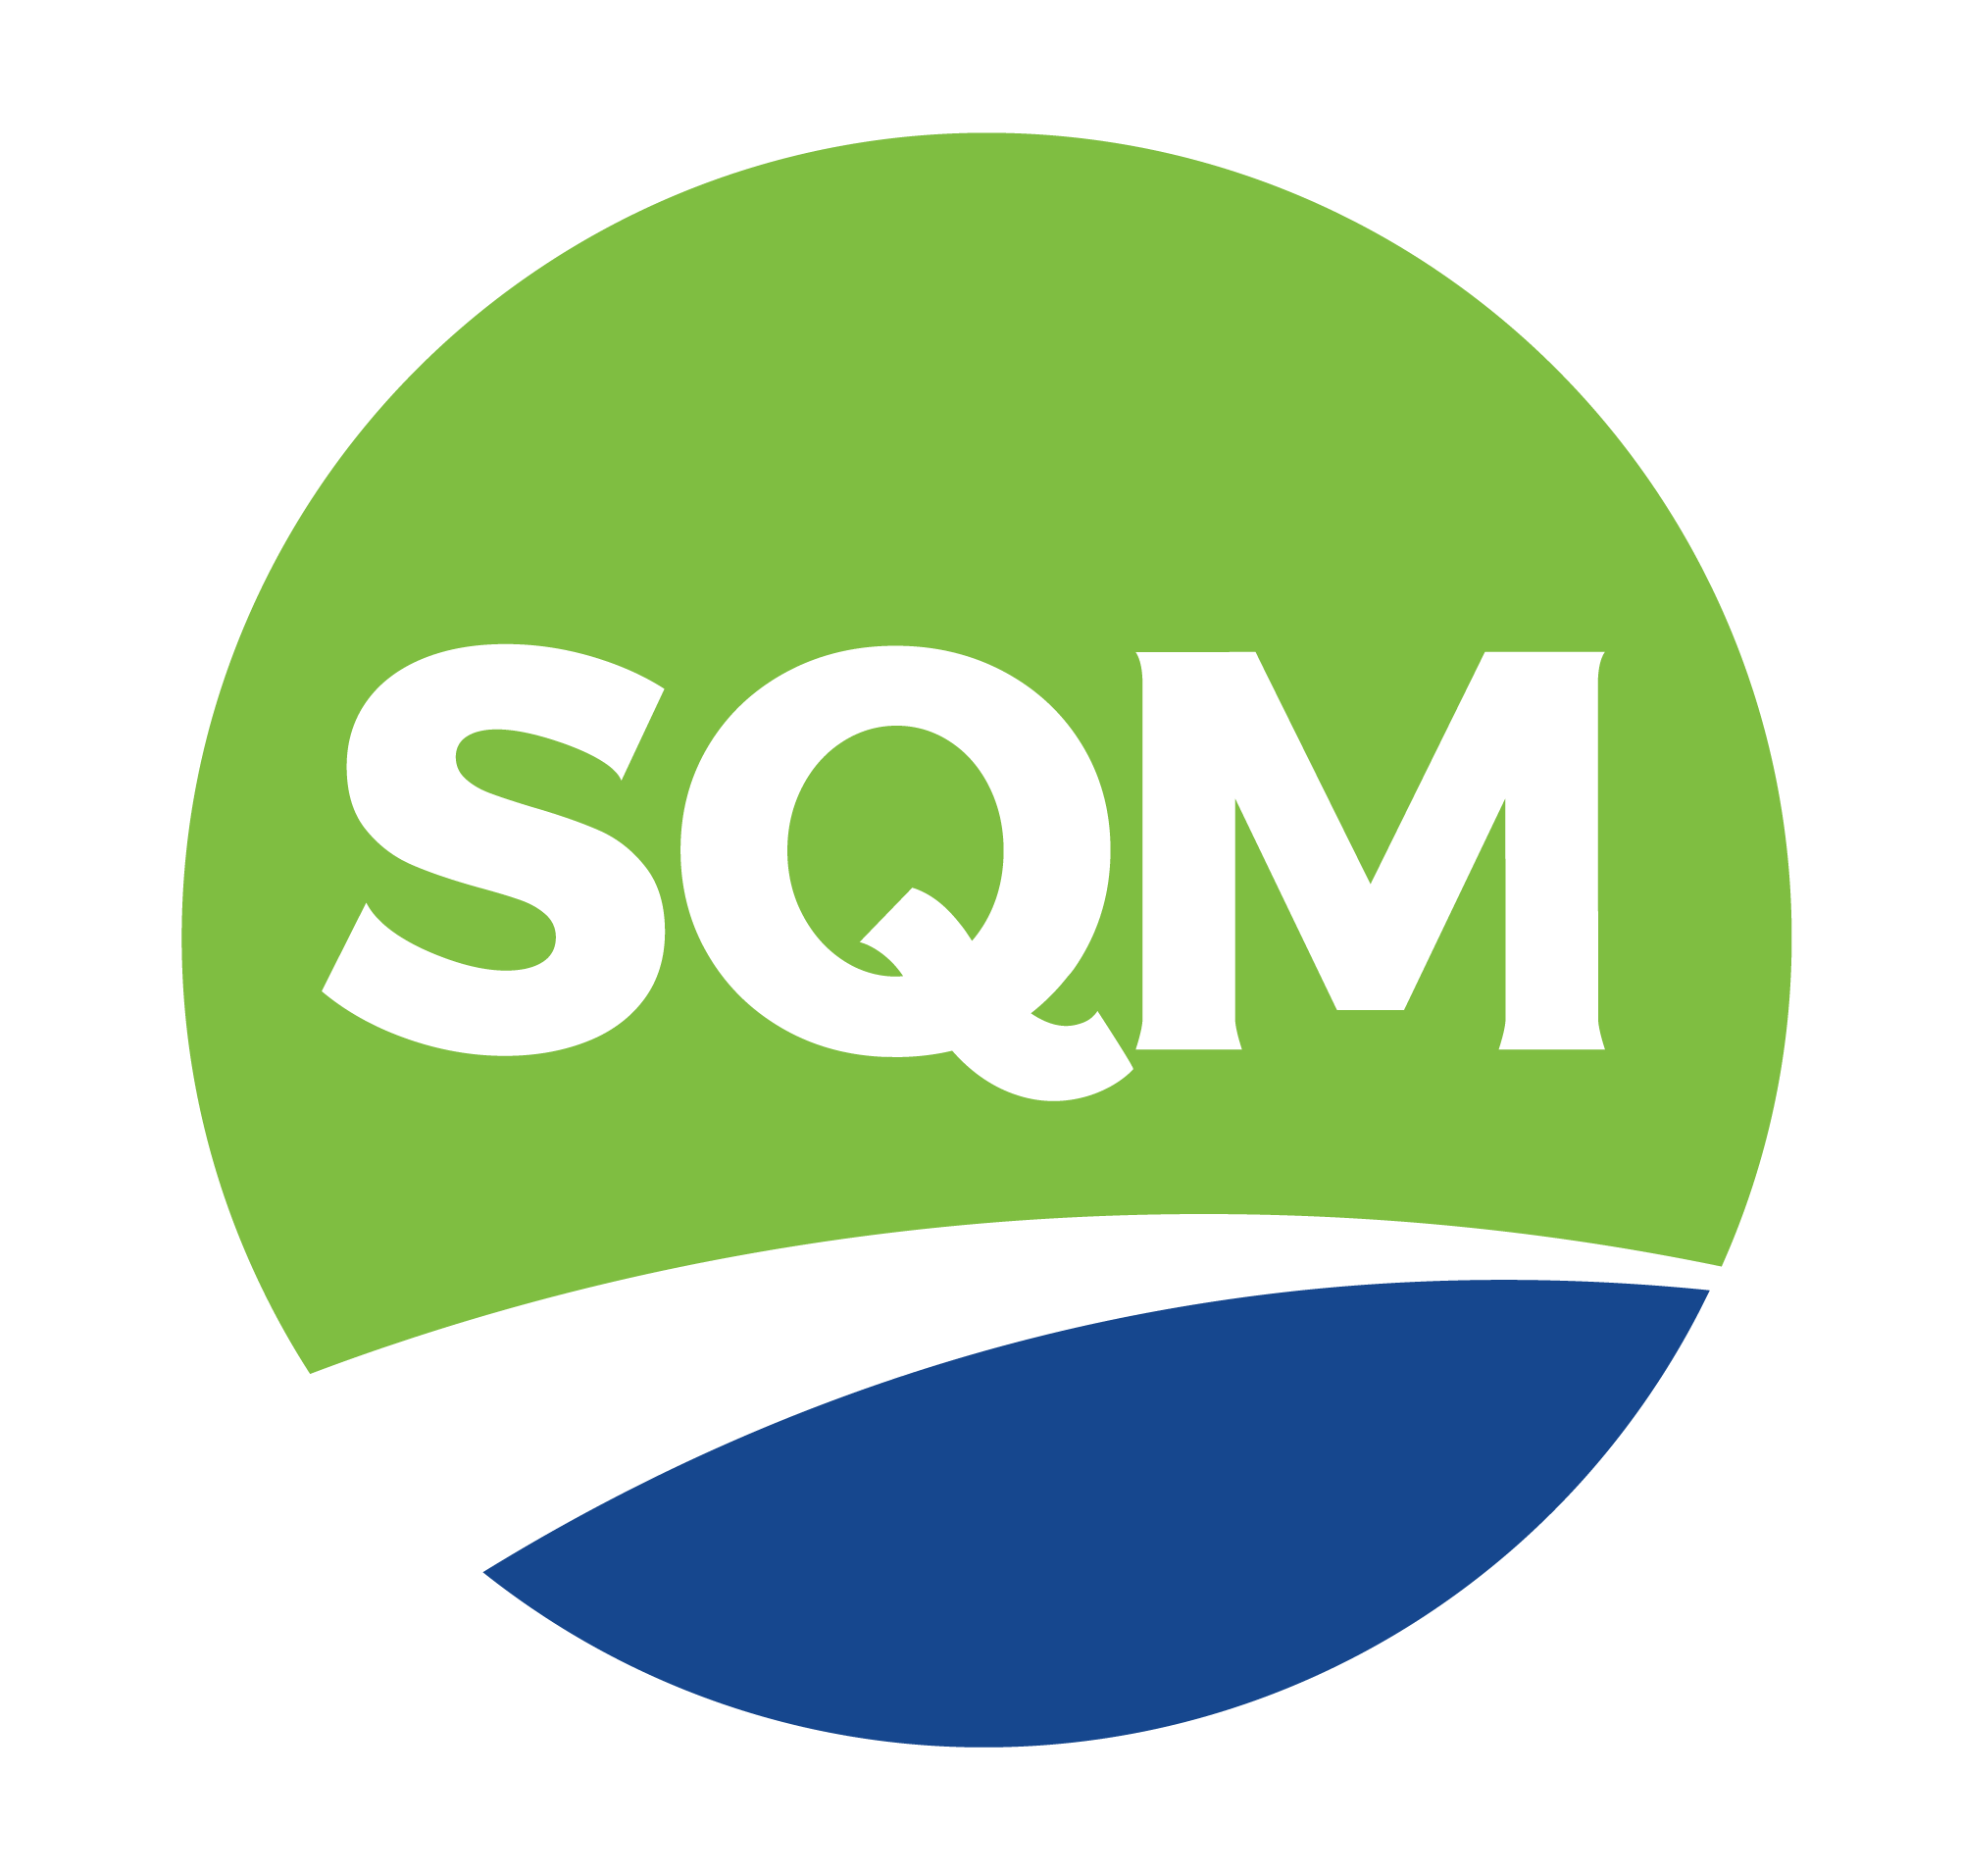 SQM small logo for Utilizing Potassium Nitrate